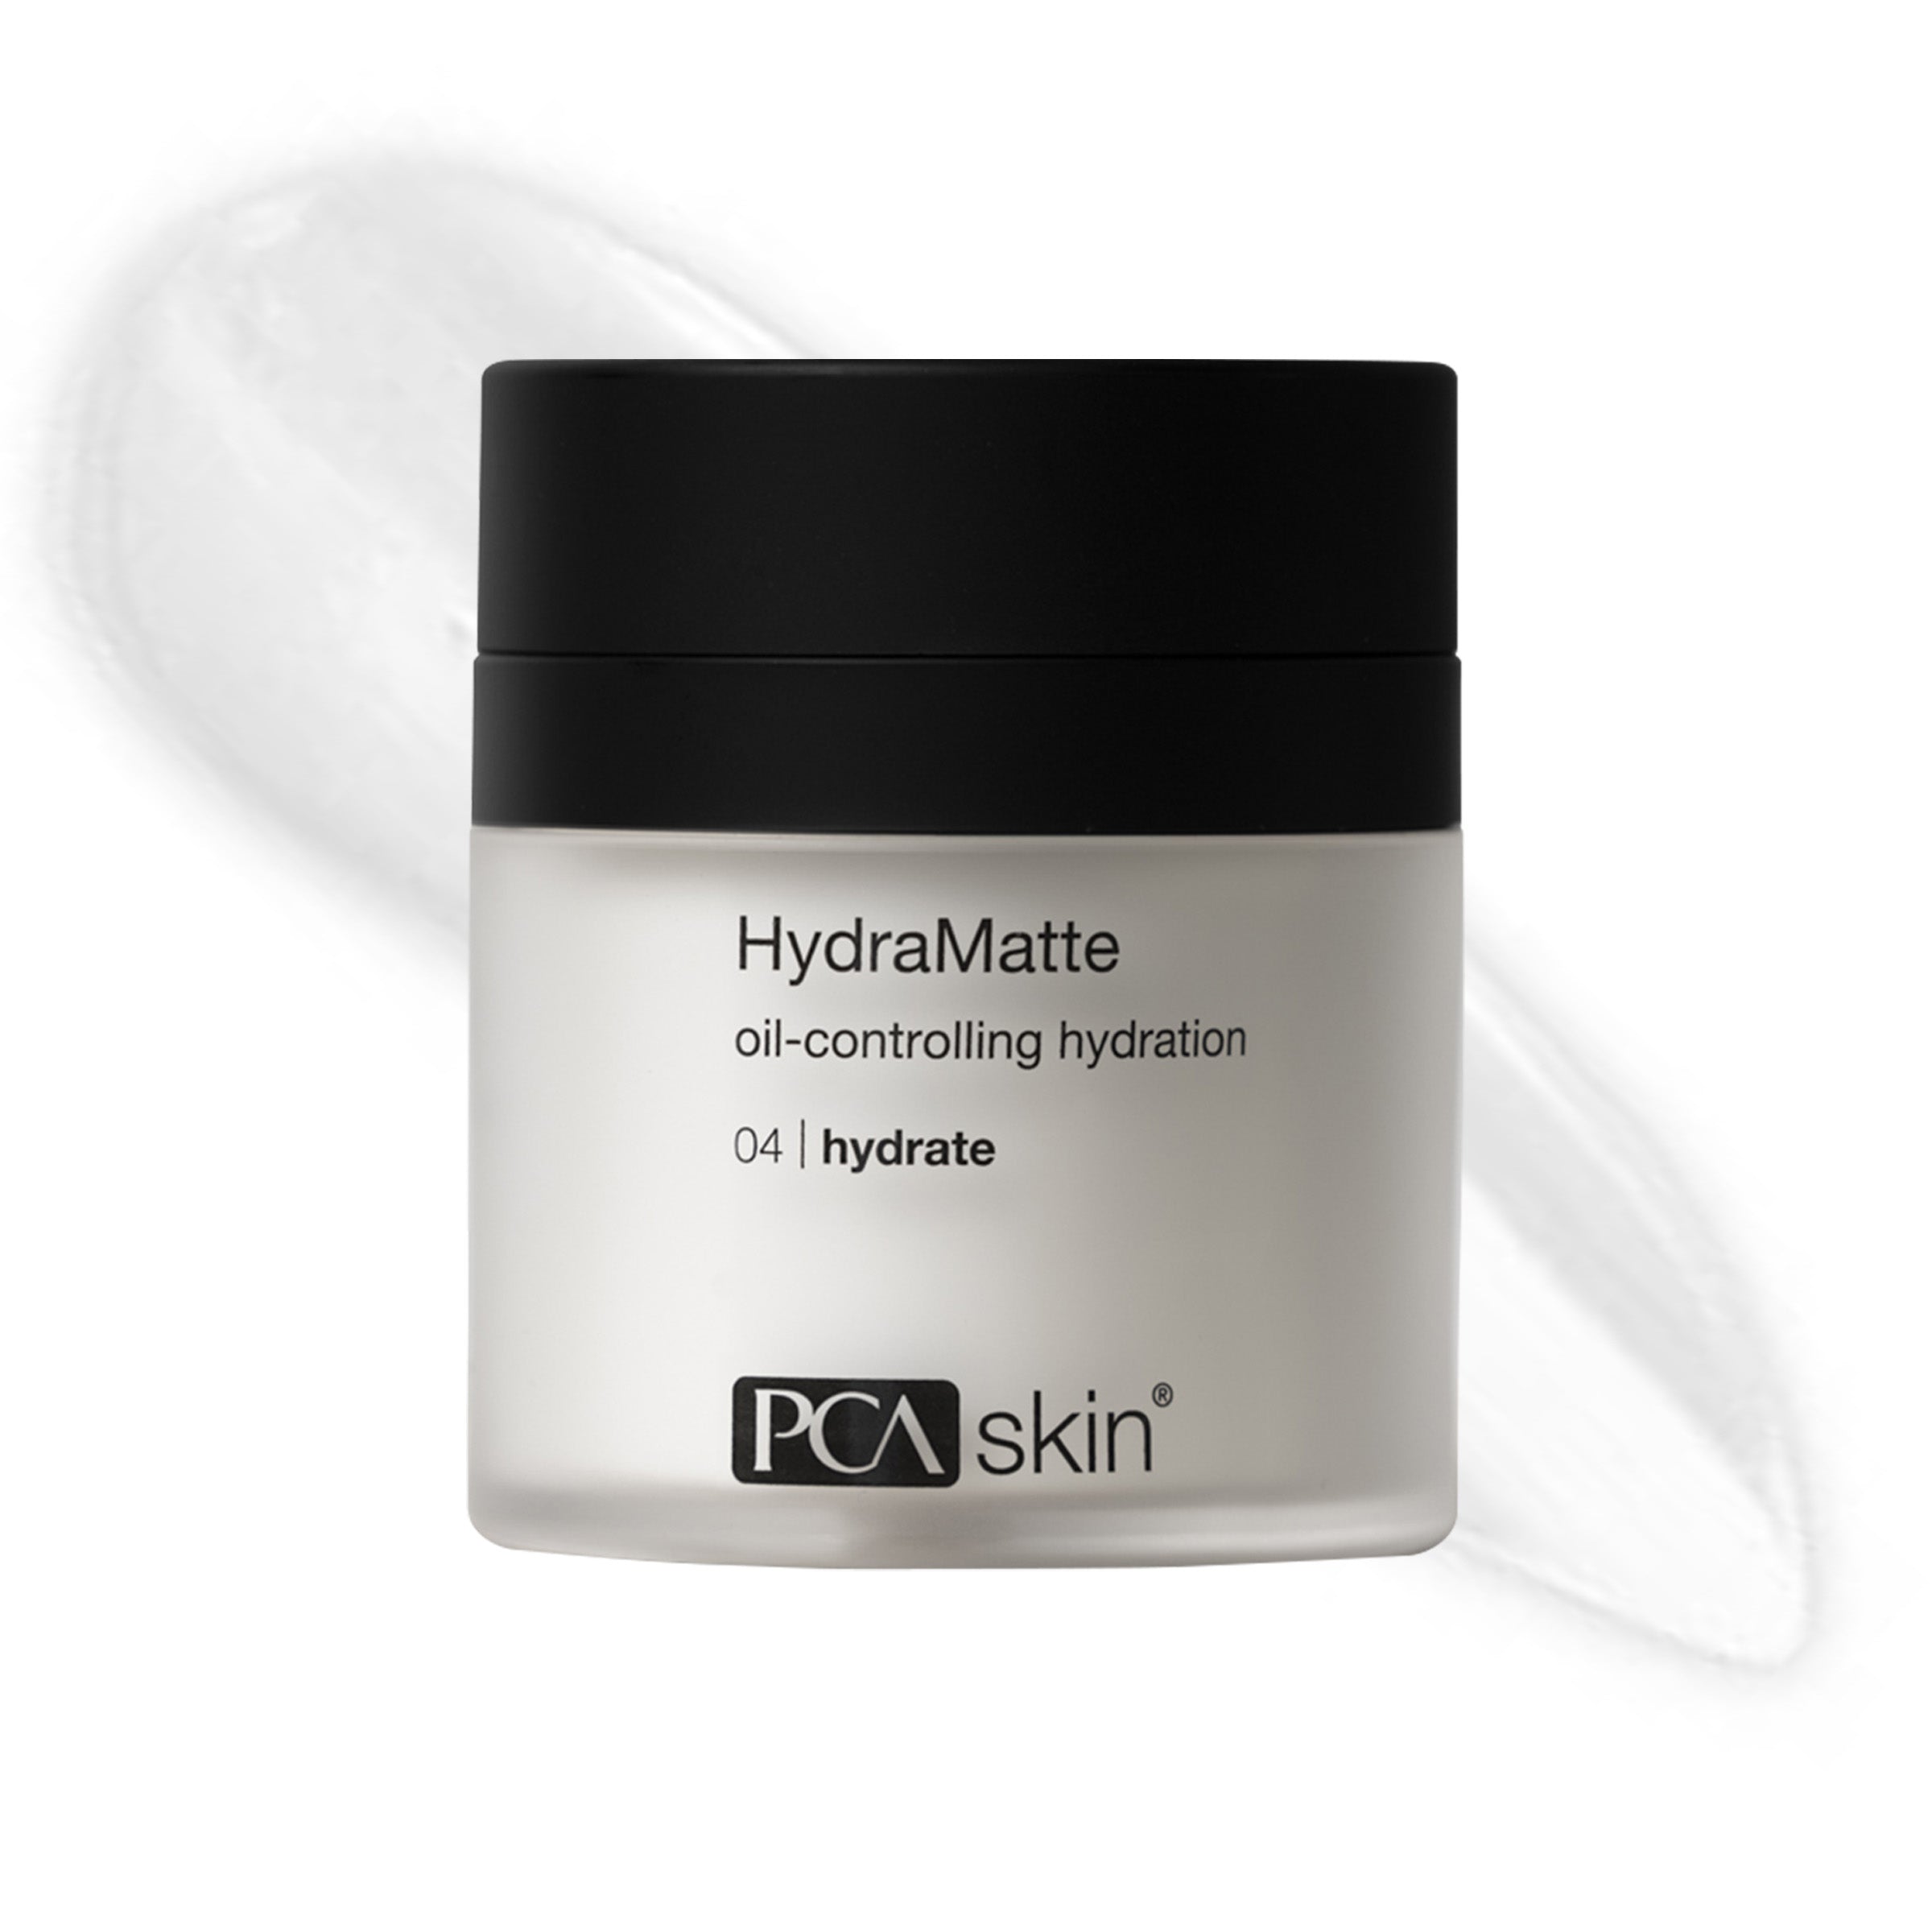 PCA Skin Hydramatte (1.8 oz)